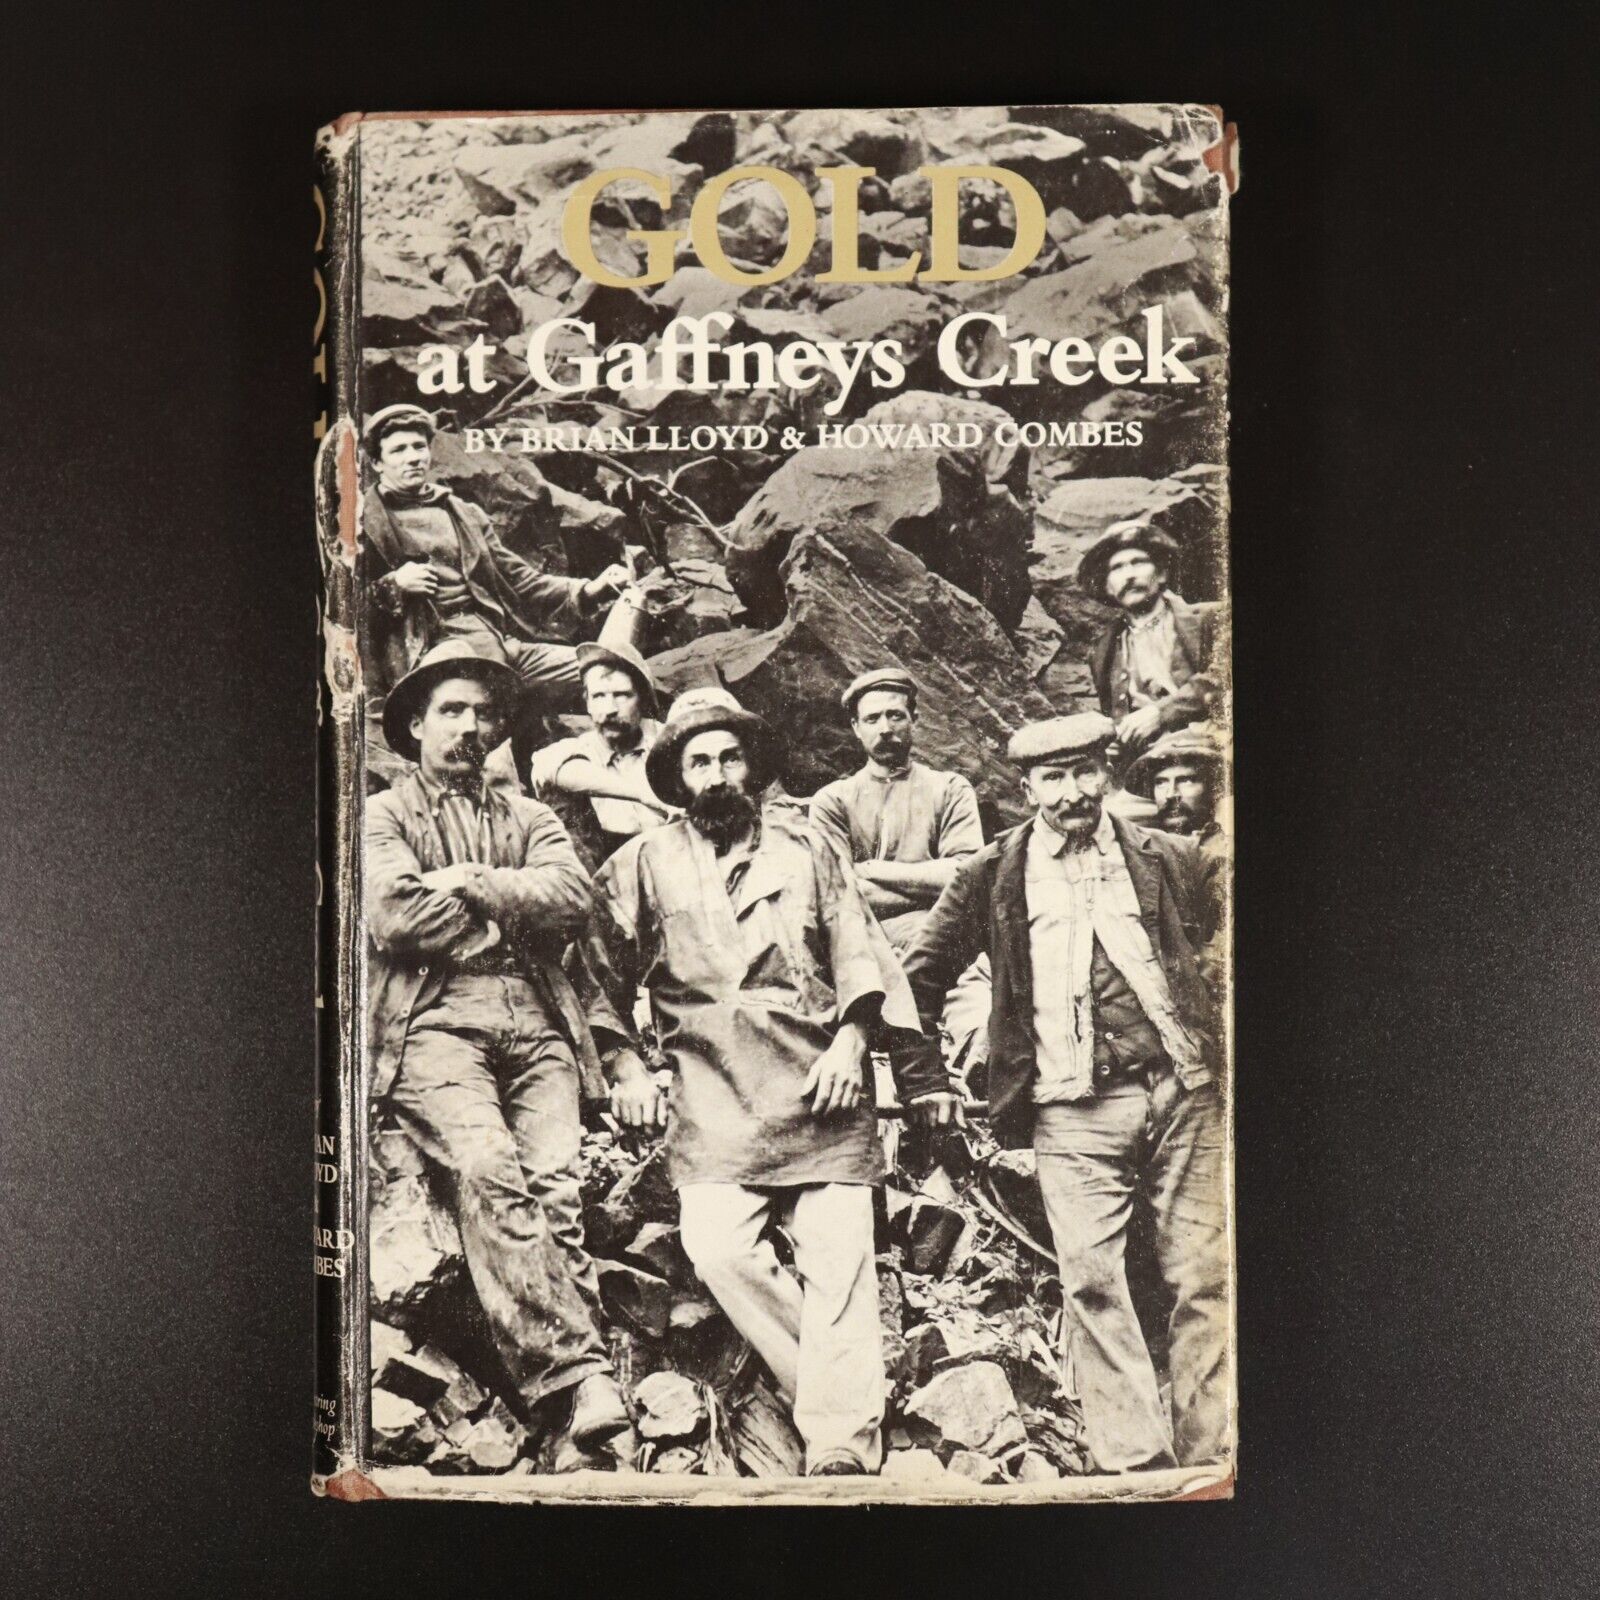 1981 Gold At Gaffneys Creek by Brian Lloyd Australian Gold Mining History Book